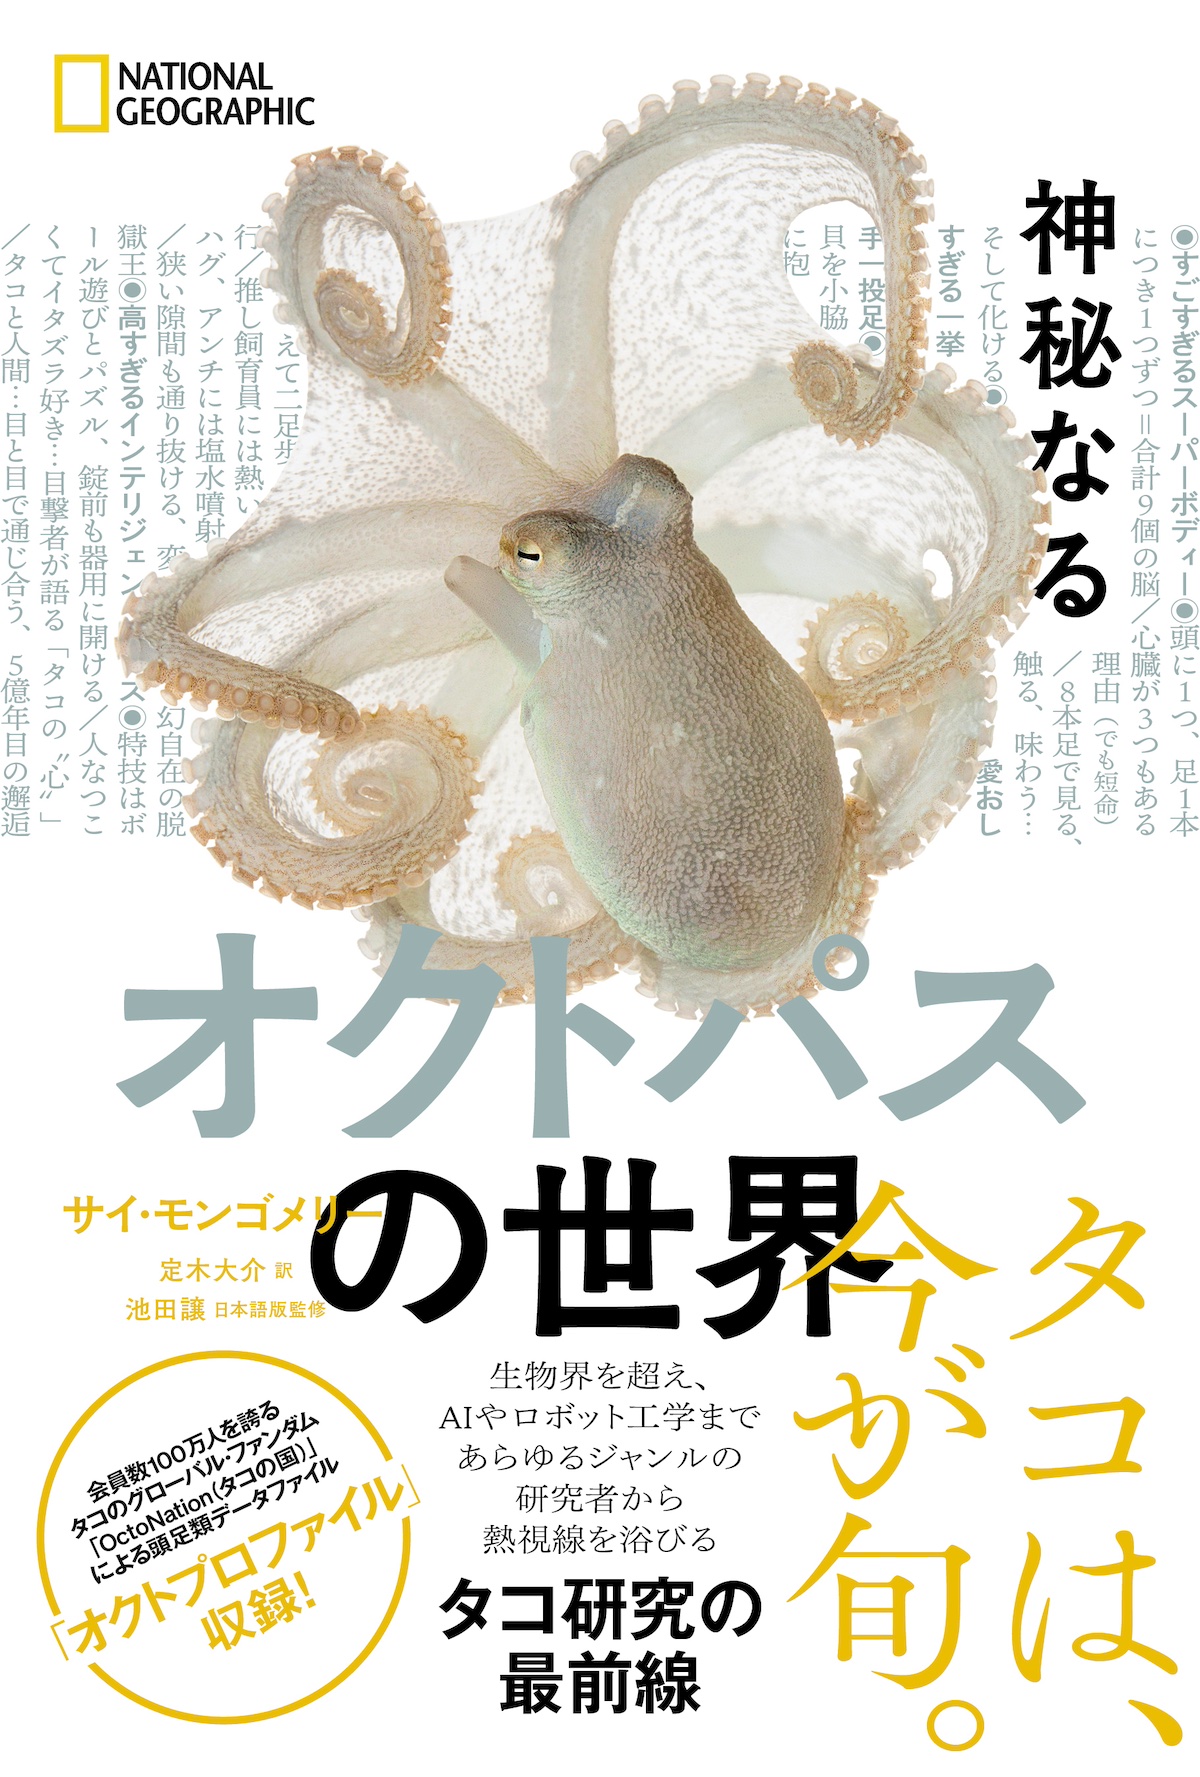 Secrets of the Octopus｜神秘なるオクトパスの世界